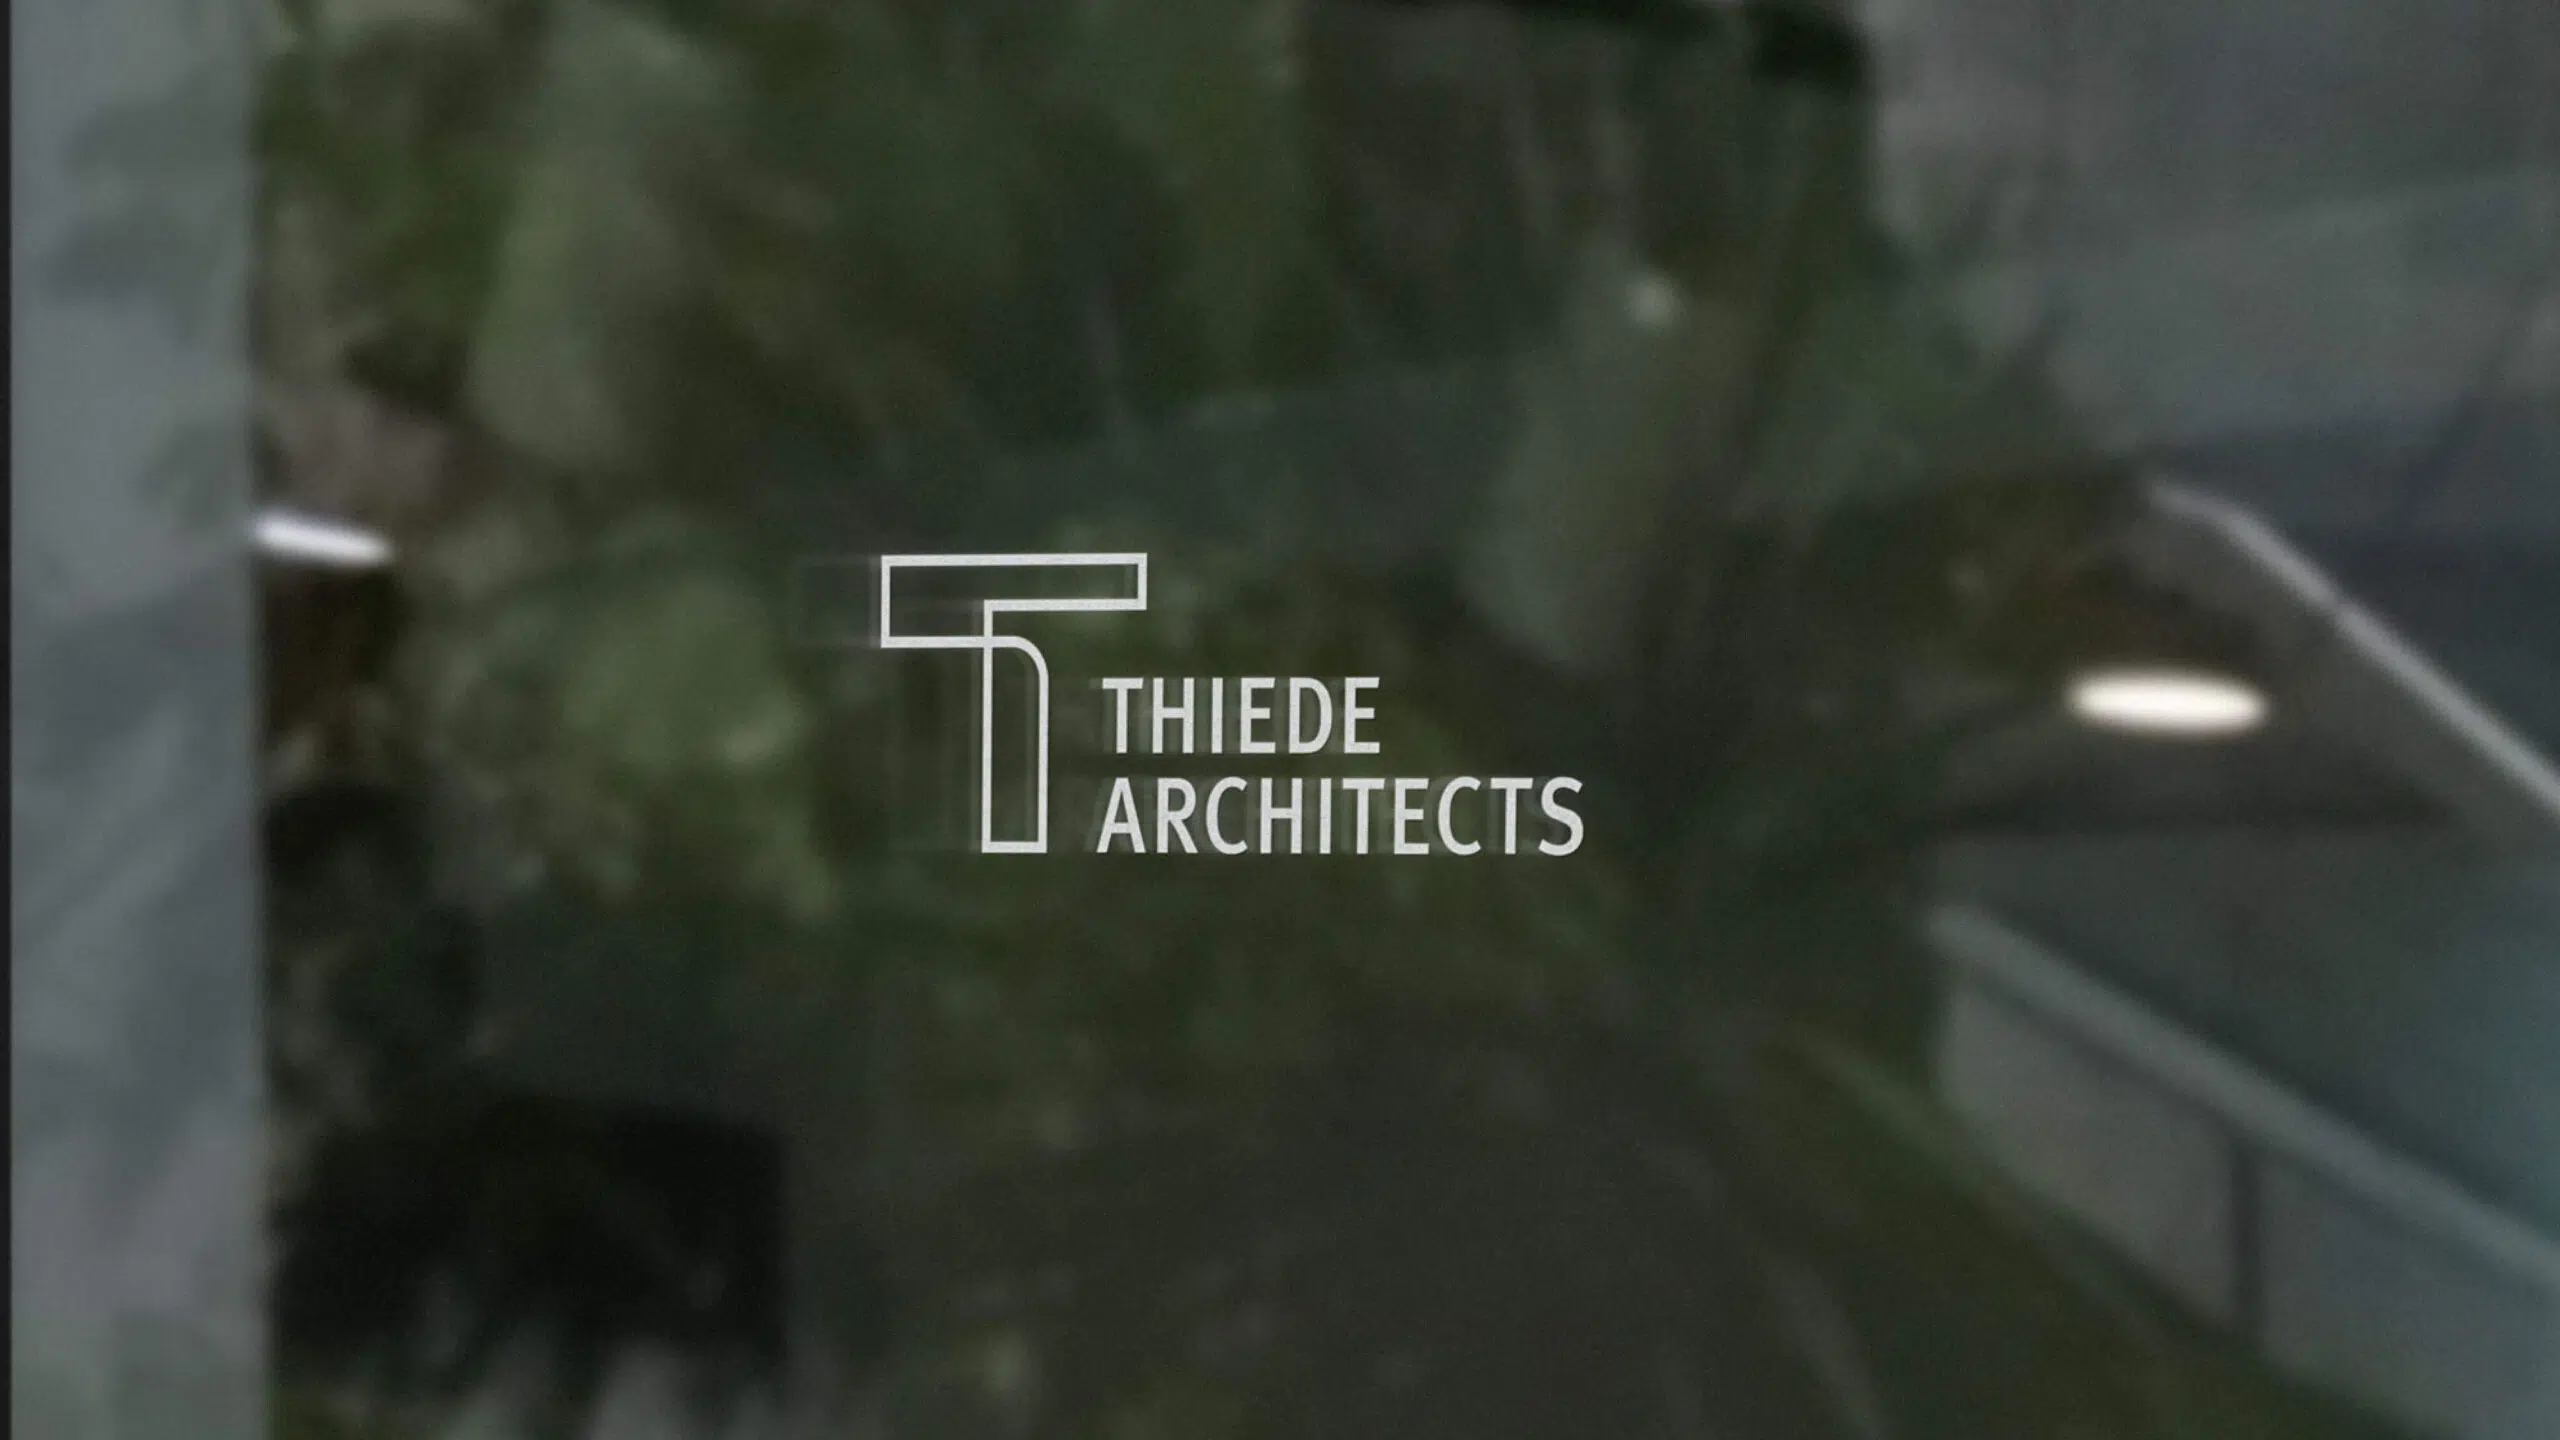 logo design for architects